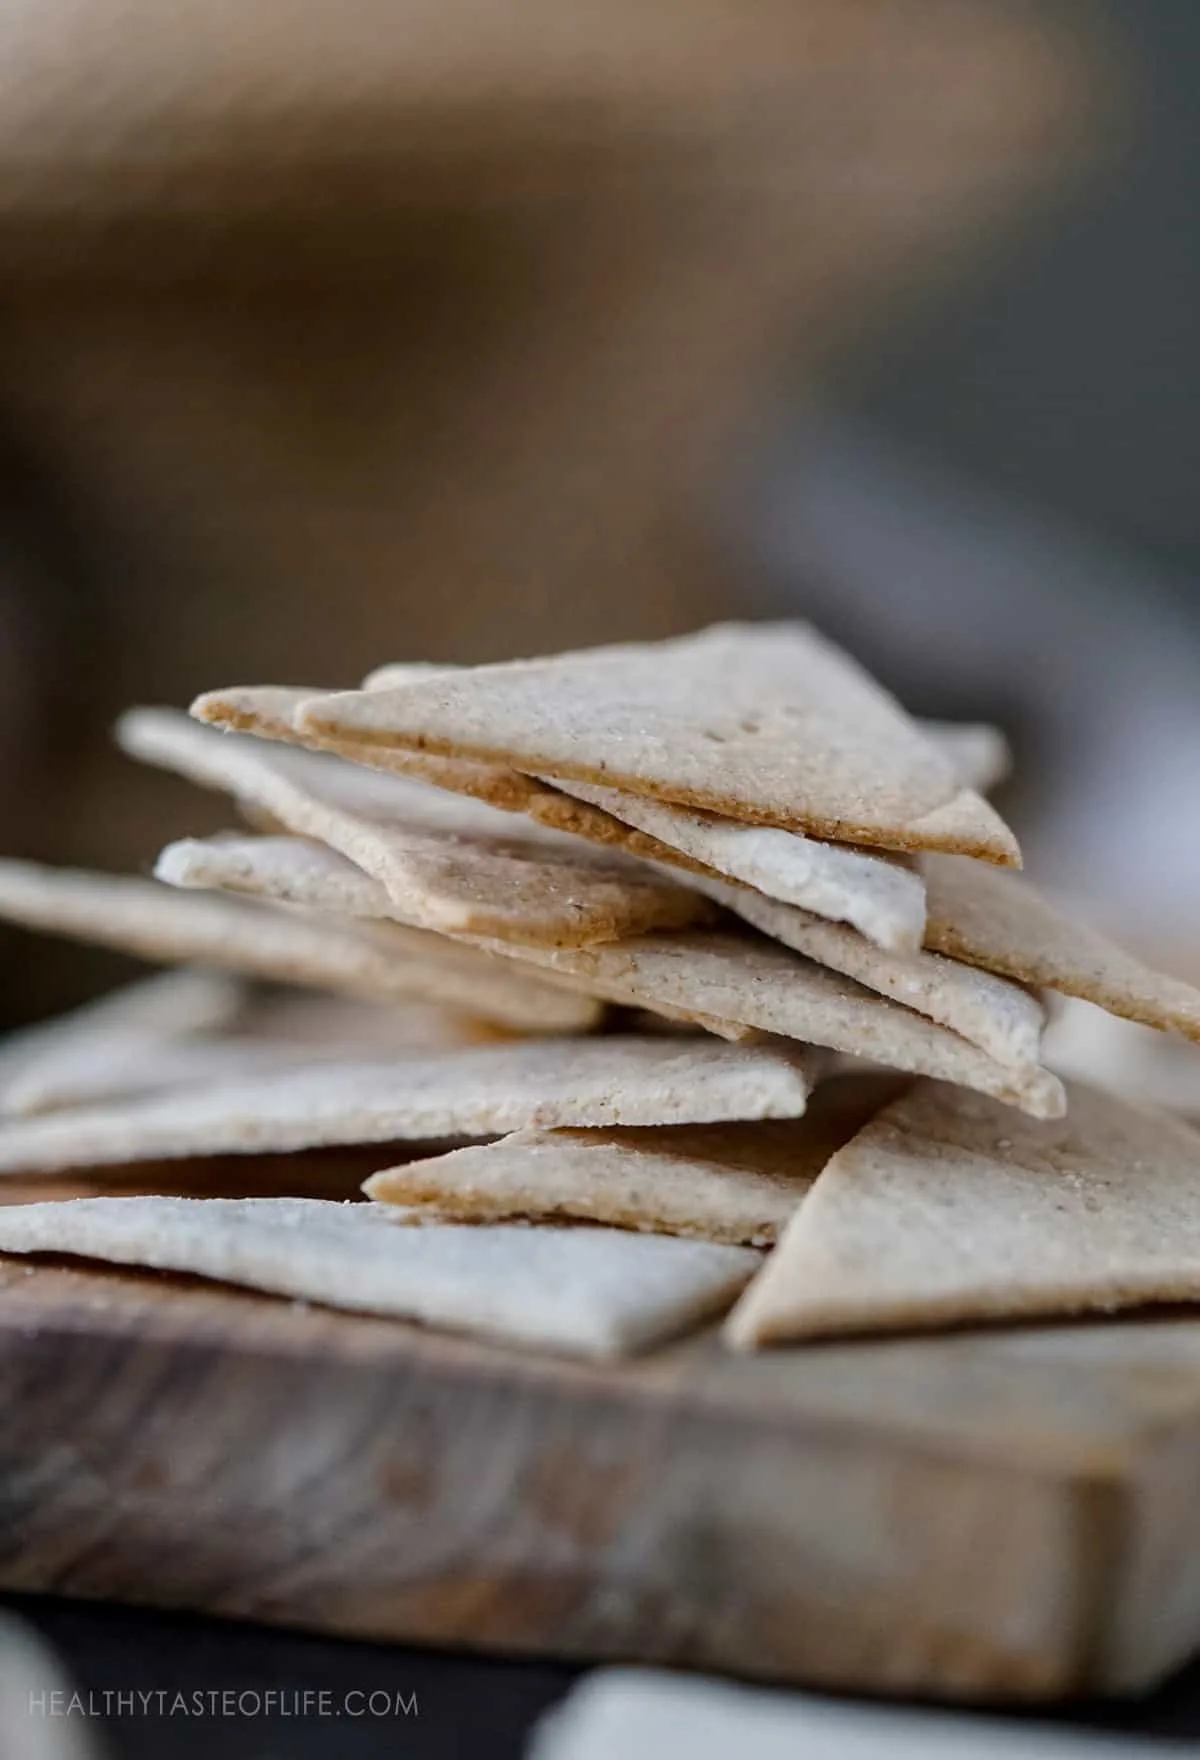 Cassava and tigernut crackers - crunchy crispy thin crackers made with grain free flours like cassava, tigenut and flax seeds. 